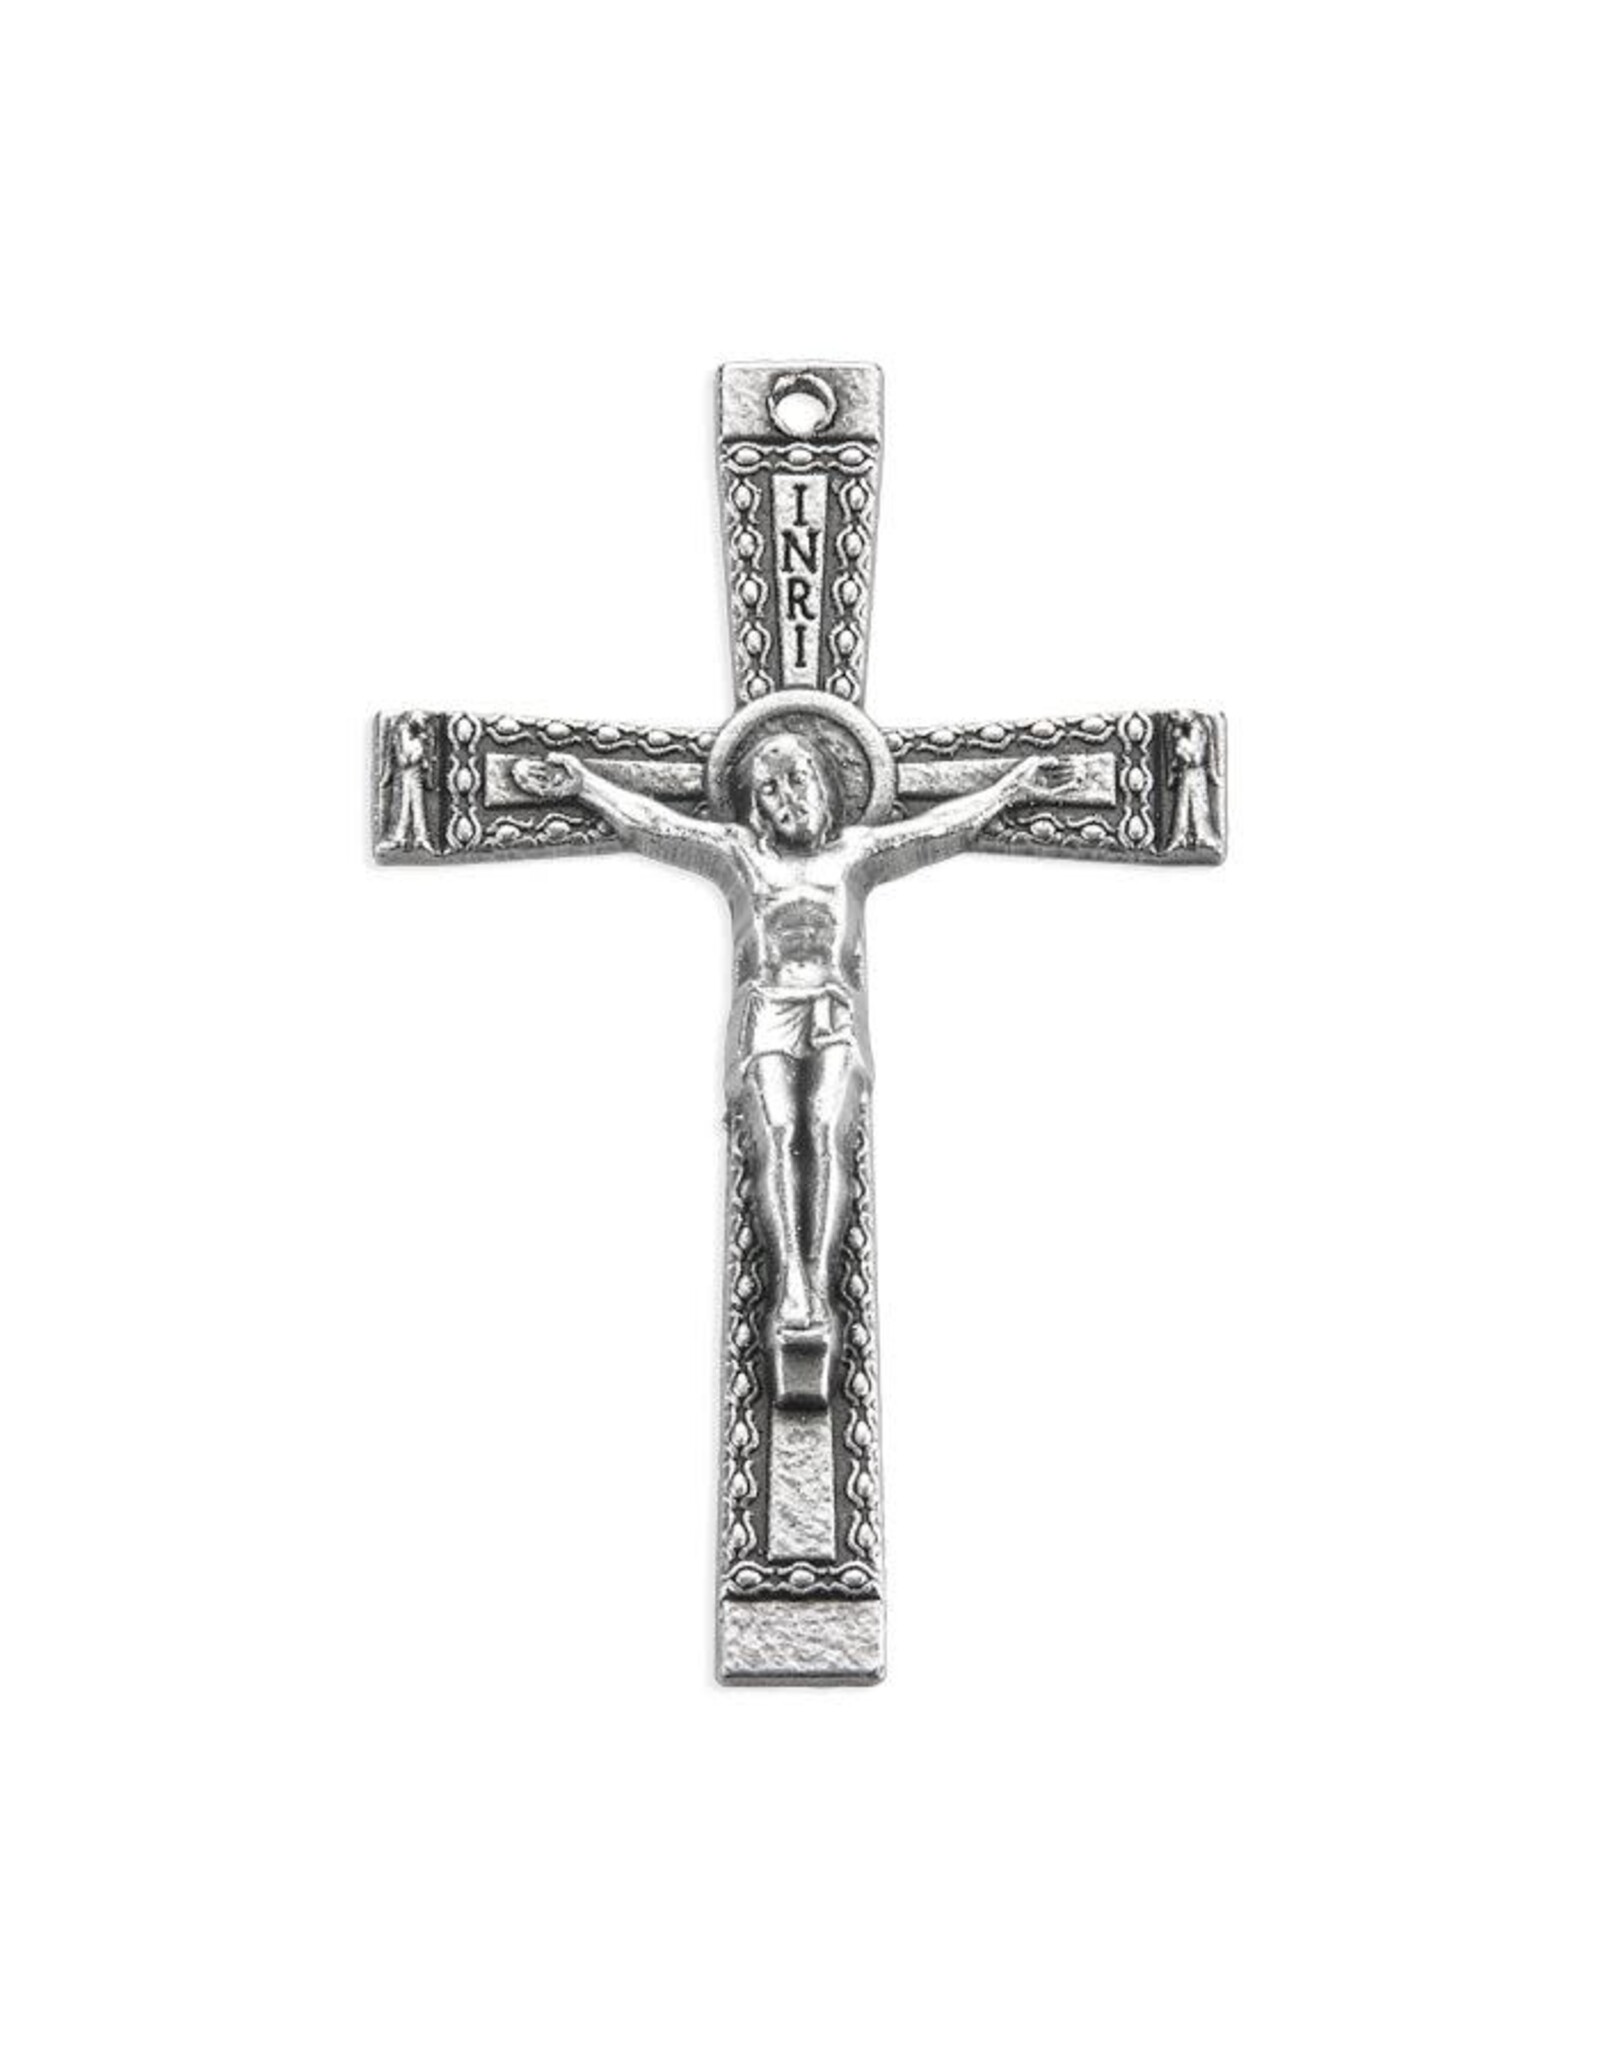 Hirten Crucifix - Oxidized Silver with Beaded Edges, 1 1/2"